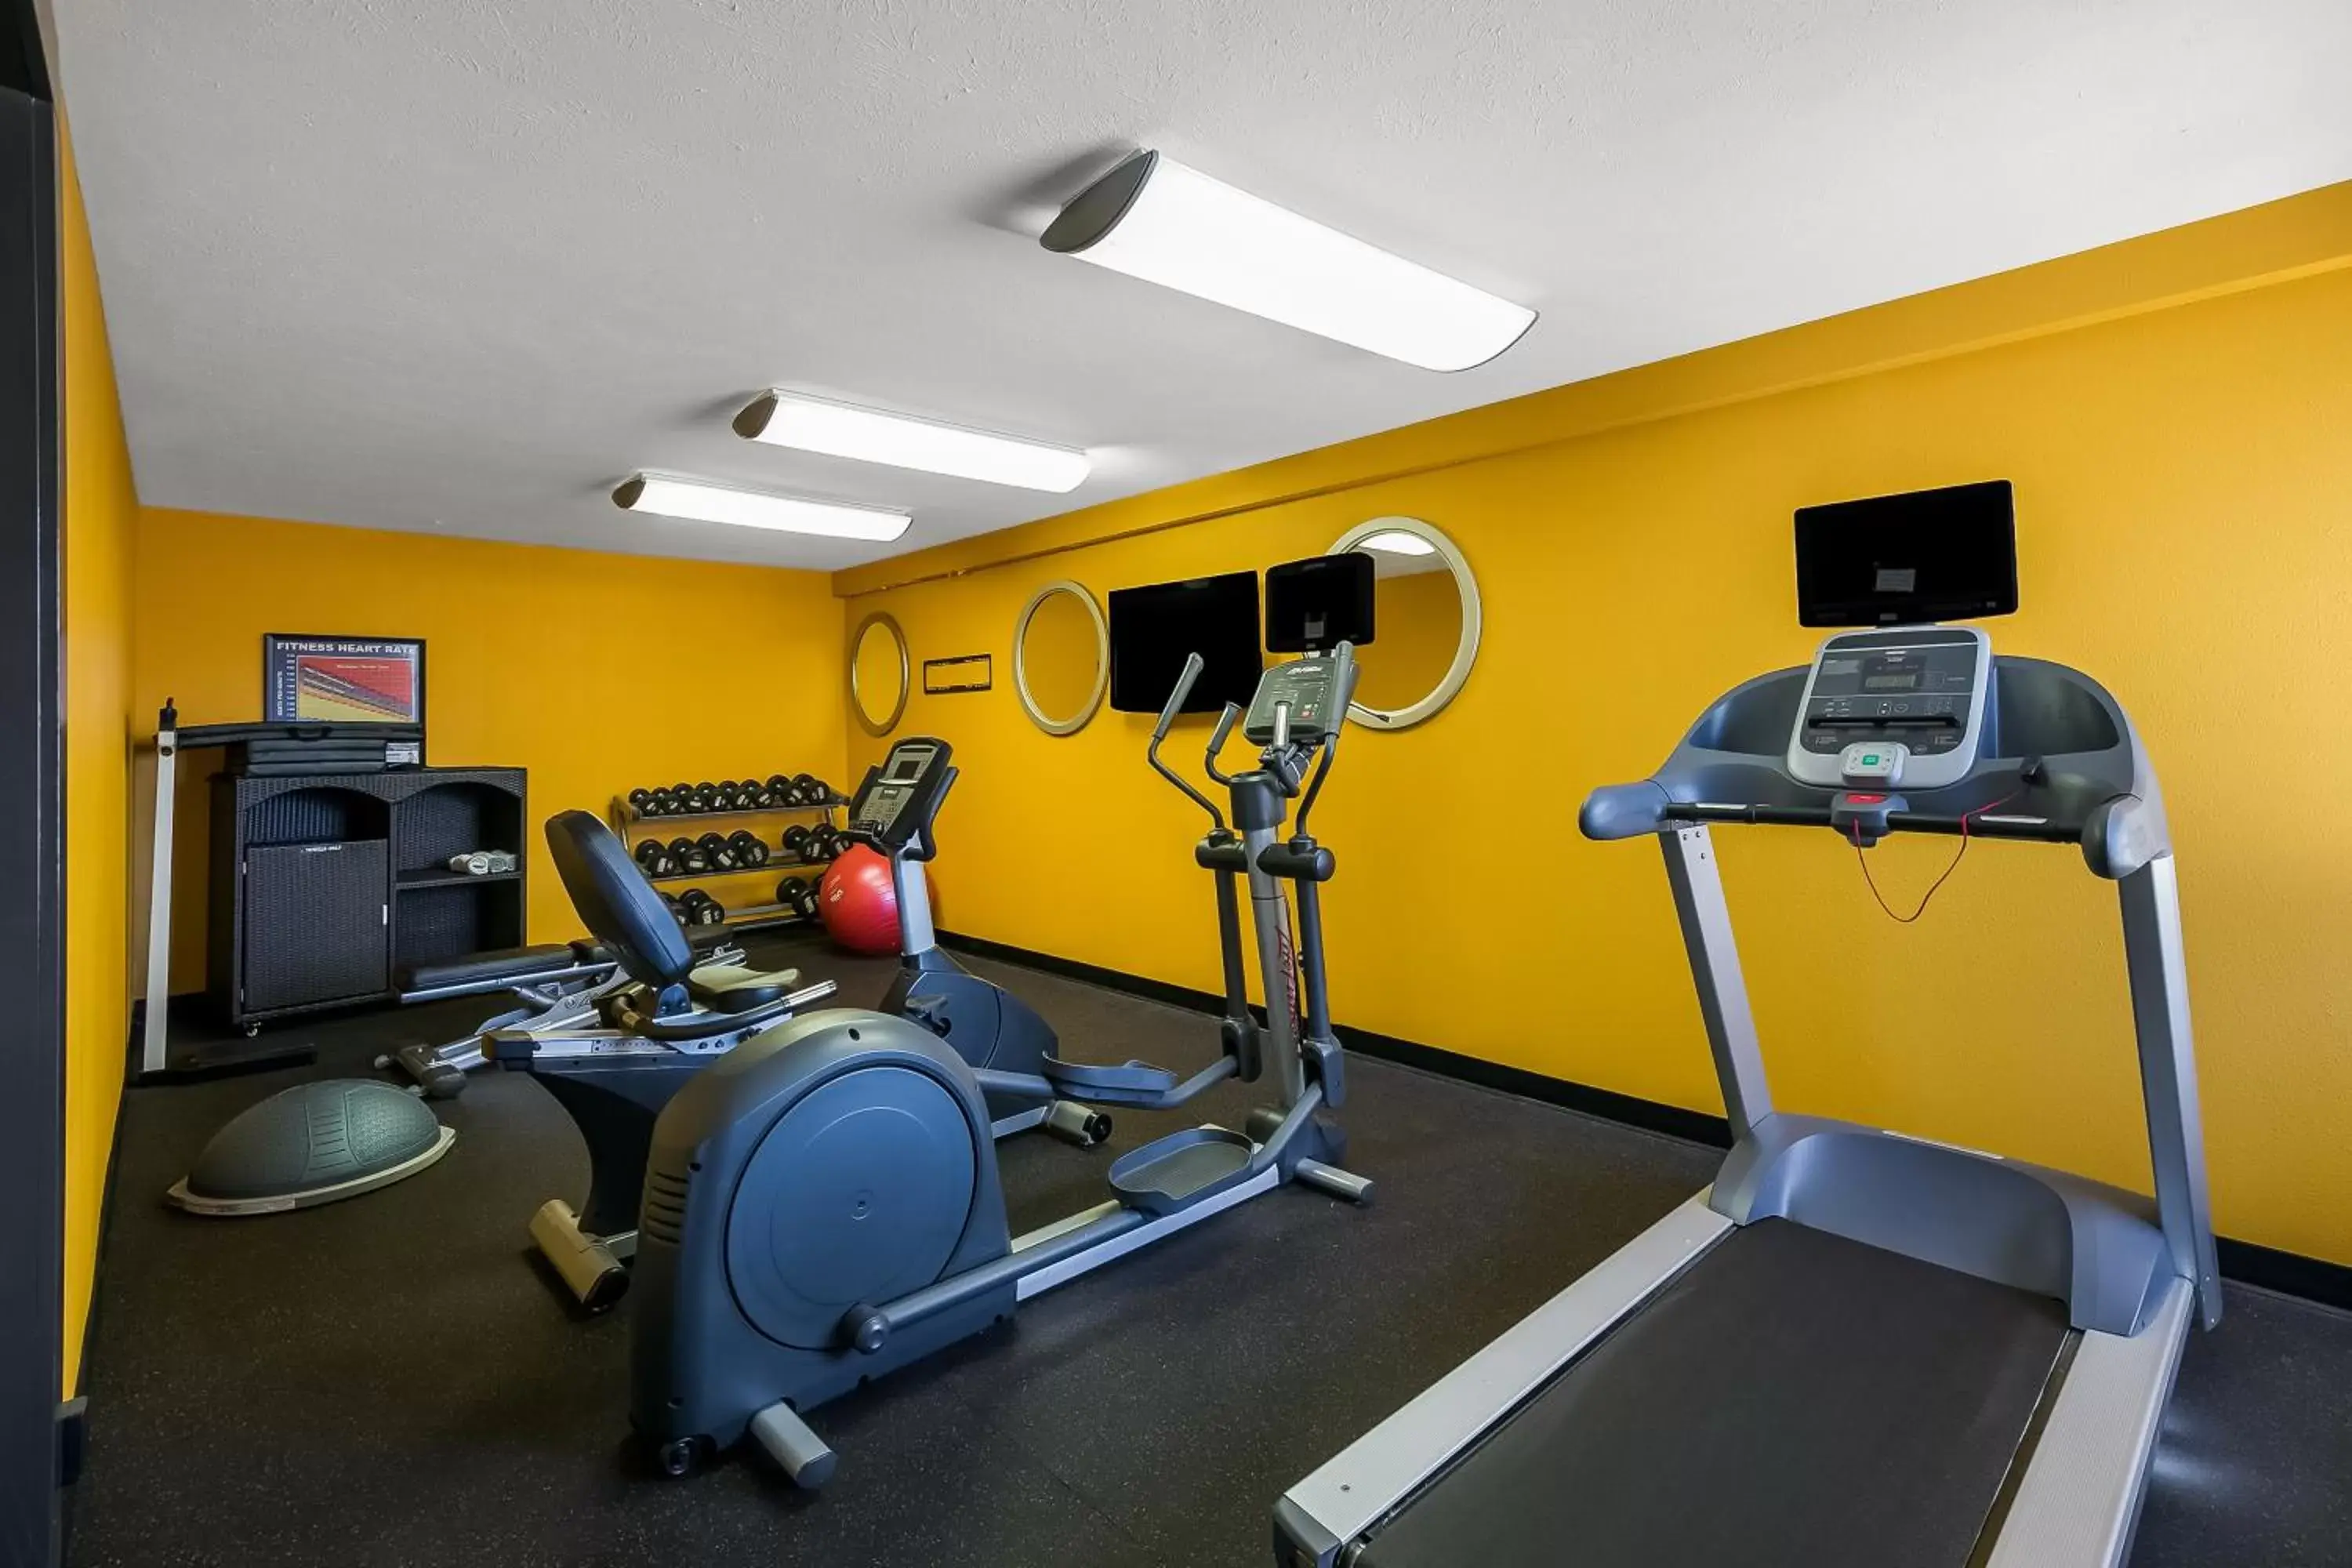 Fitness centre/facilities, Fitness Center/Facilities in Americas Best Value Sandman Inn